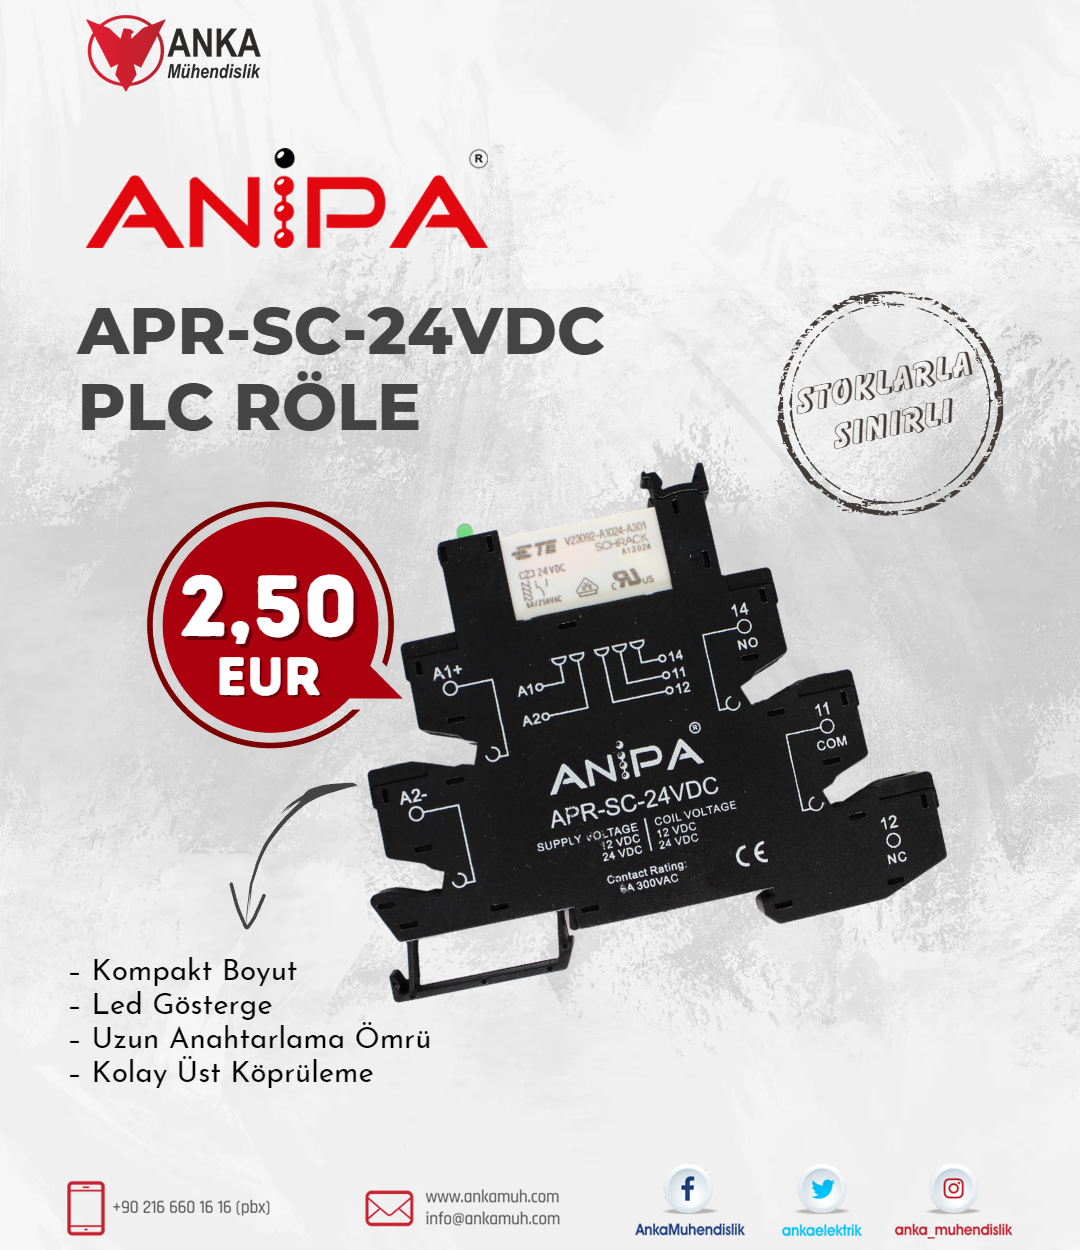 Anipa PLC Röle Kampanyası| Anka Mühendislik